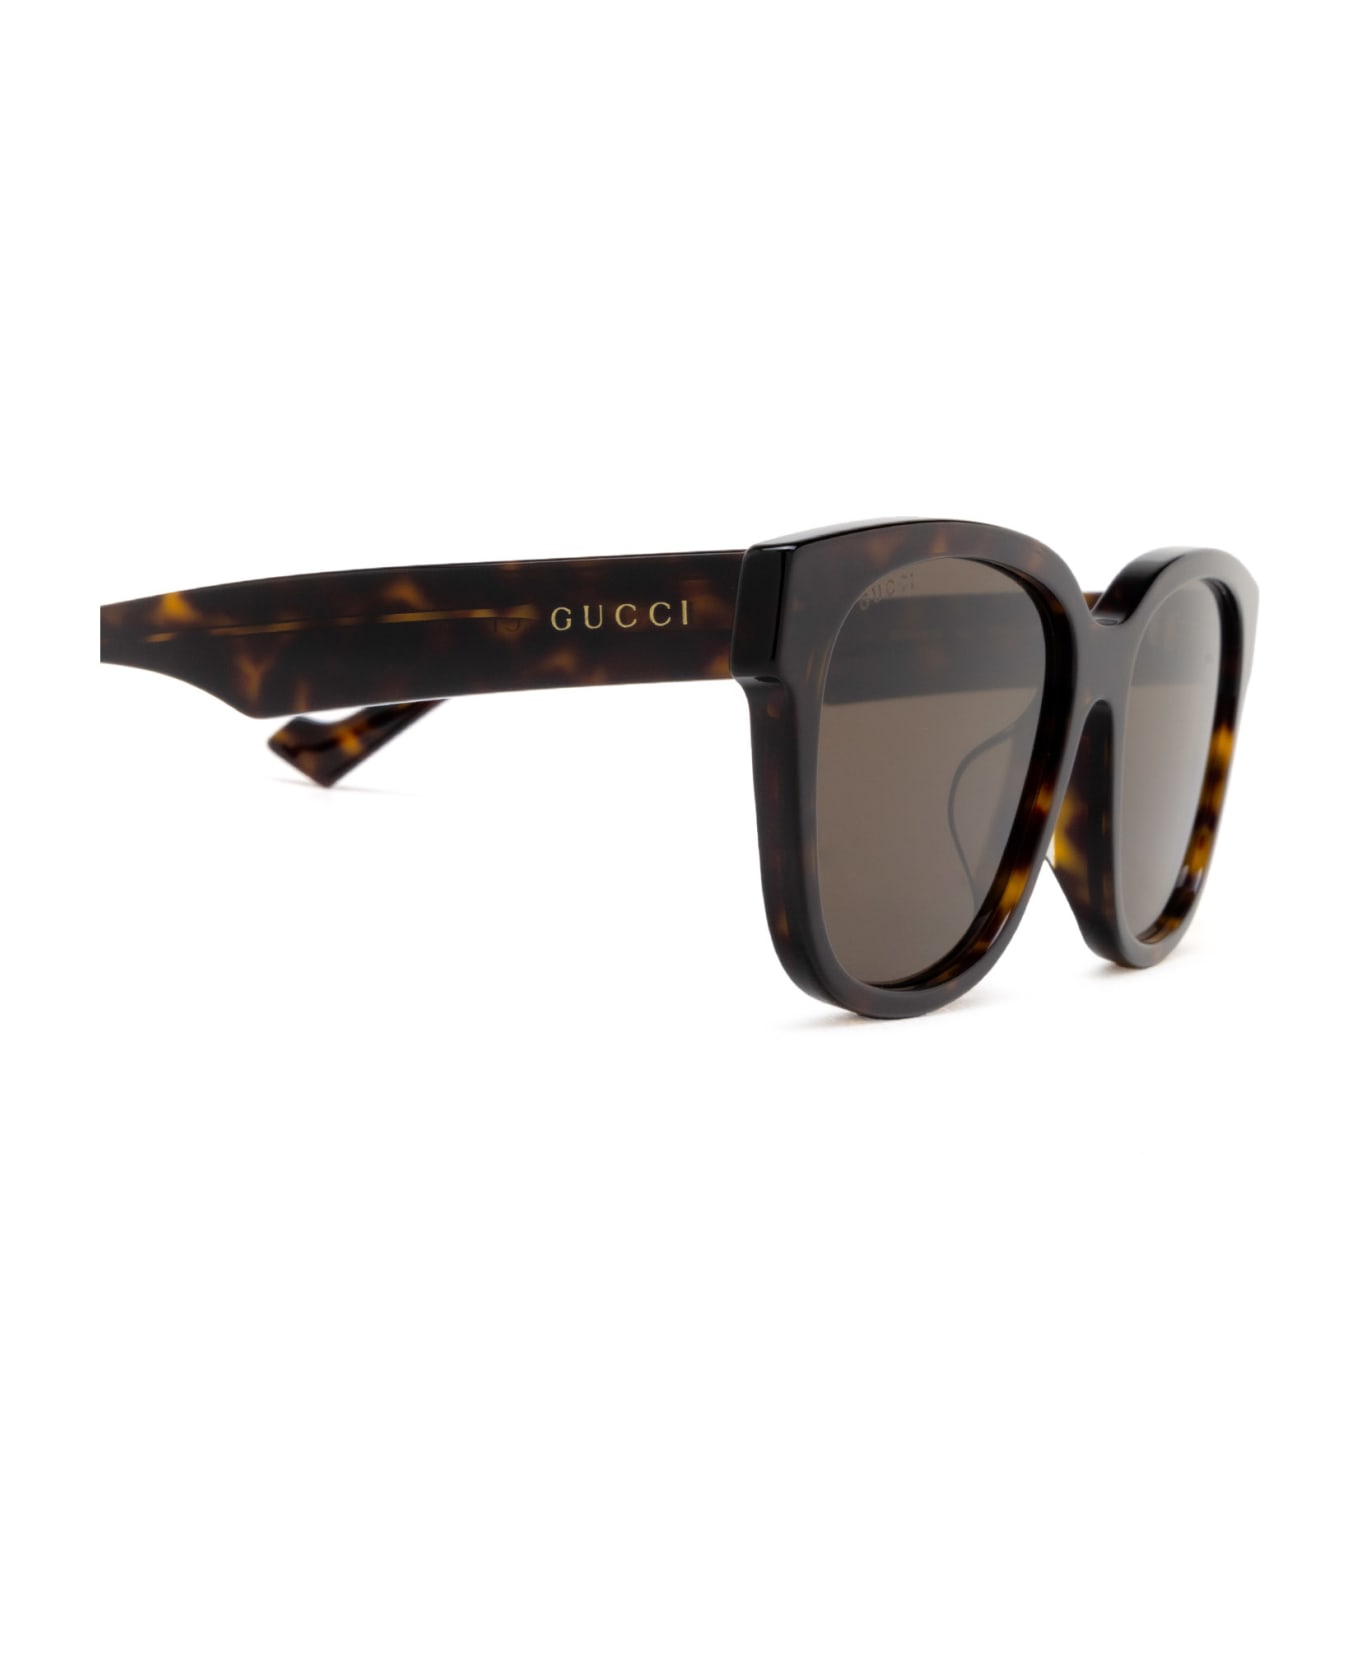 Gucci Eyewear Gg1430sk Havana Sunglasses - Havana